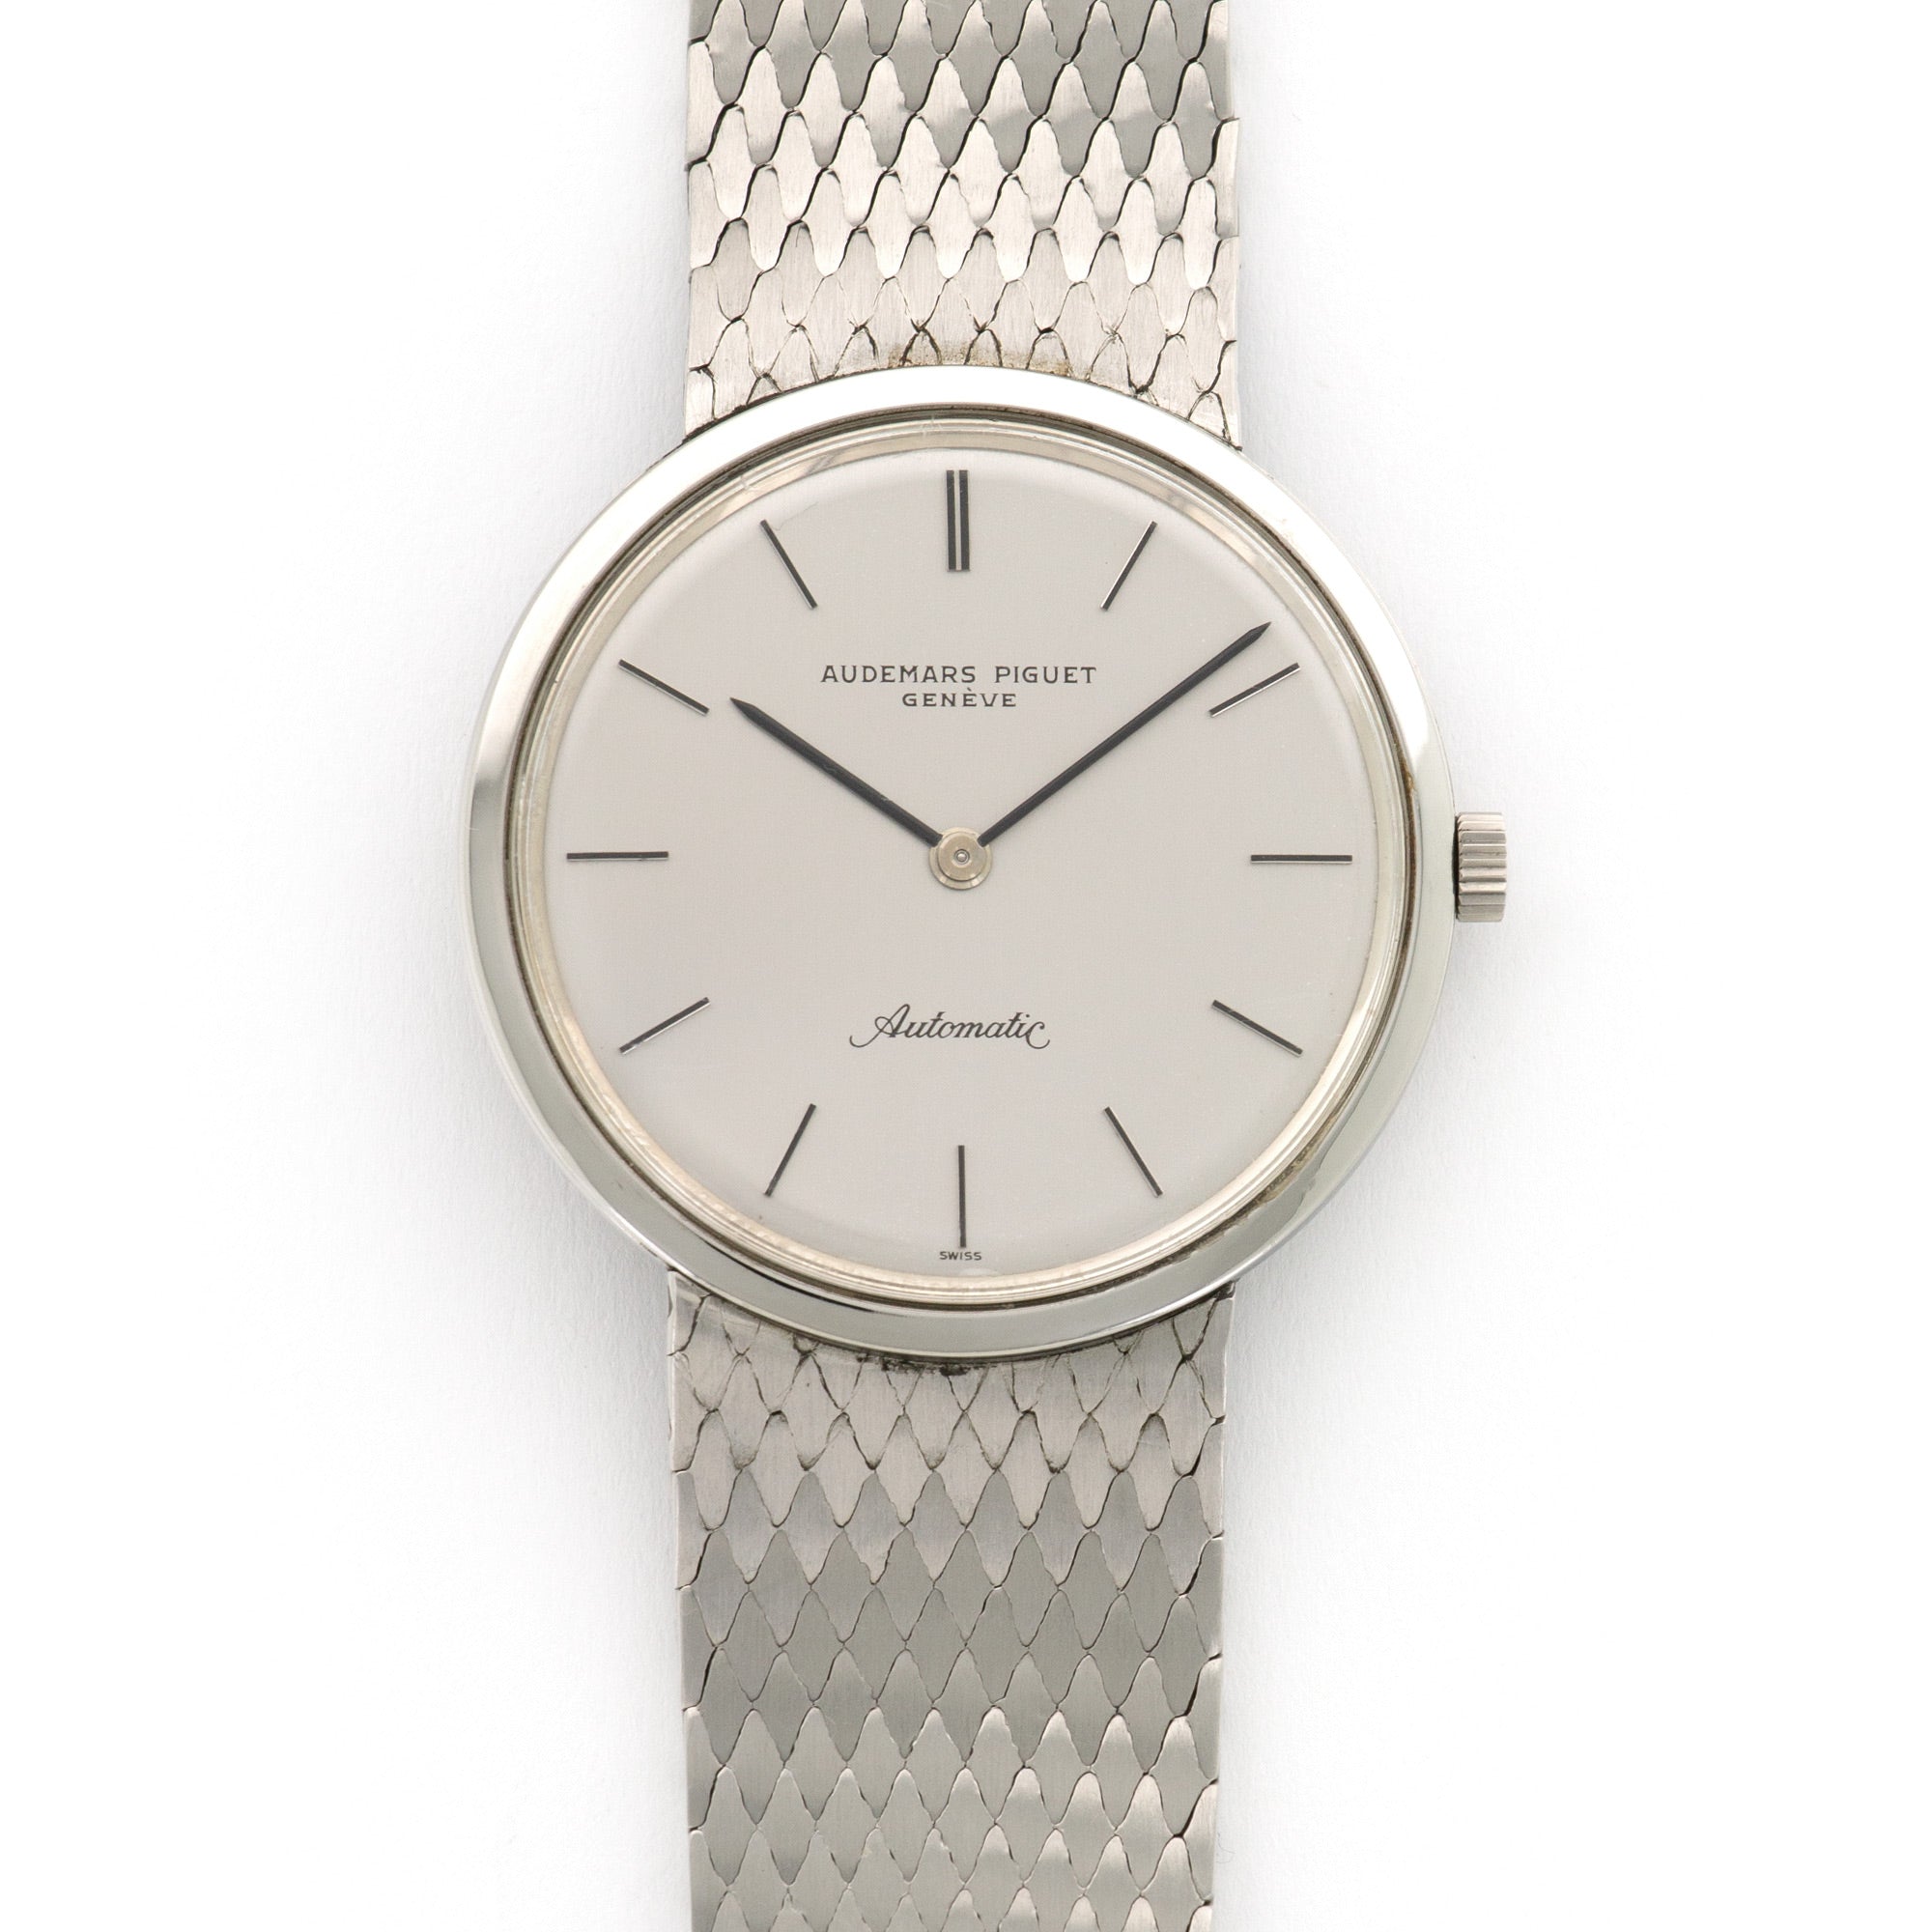 Audemars Piguet - Audemars Piguet Steel Automatic Watch Ref. 5381 - The Keystone Watches